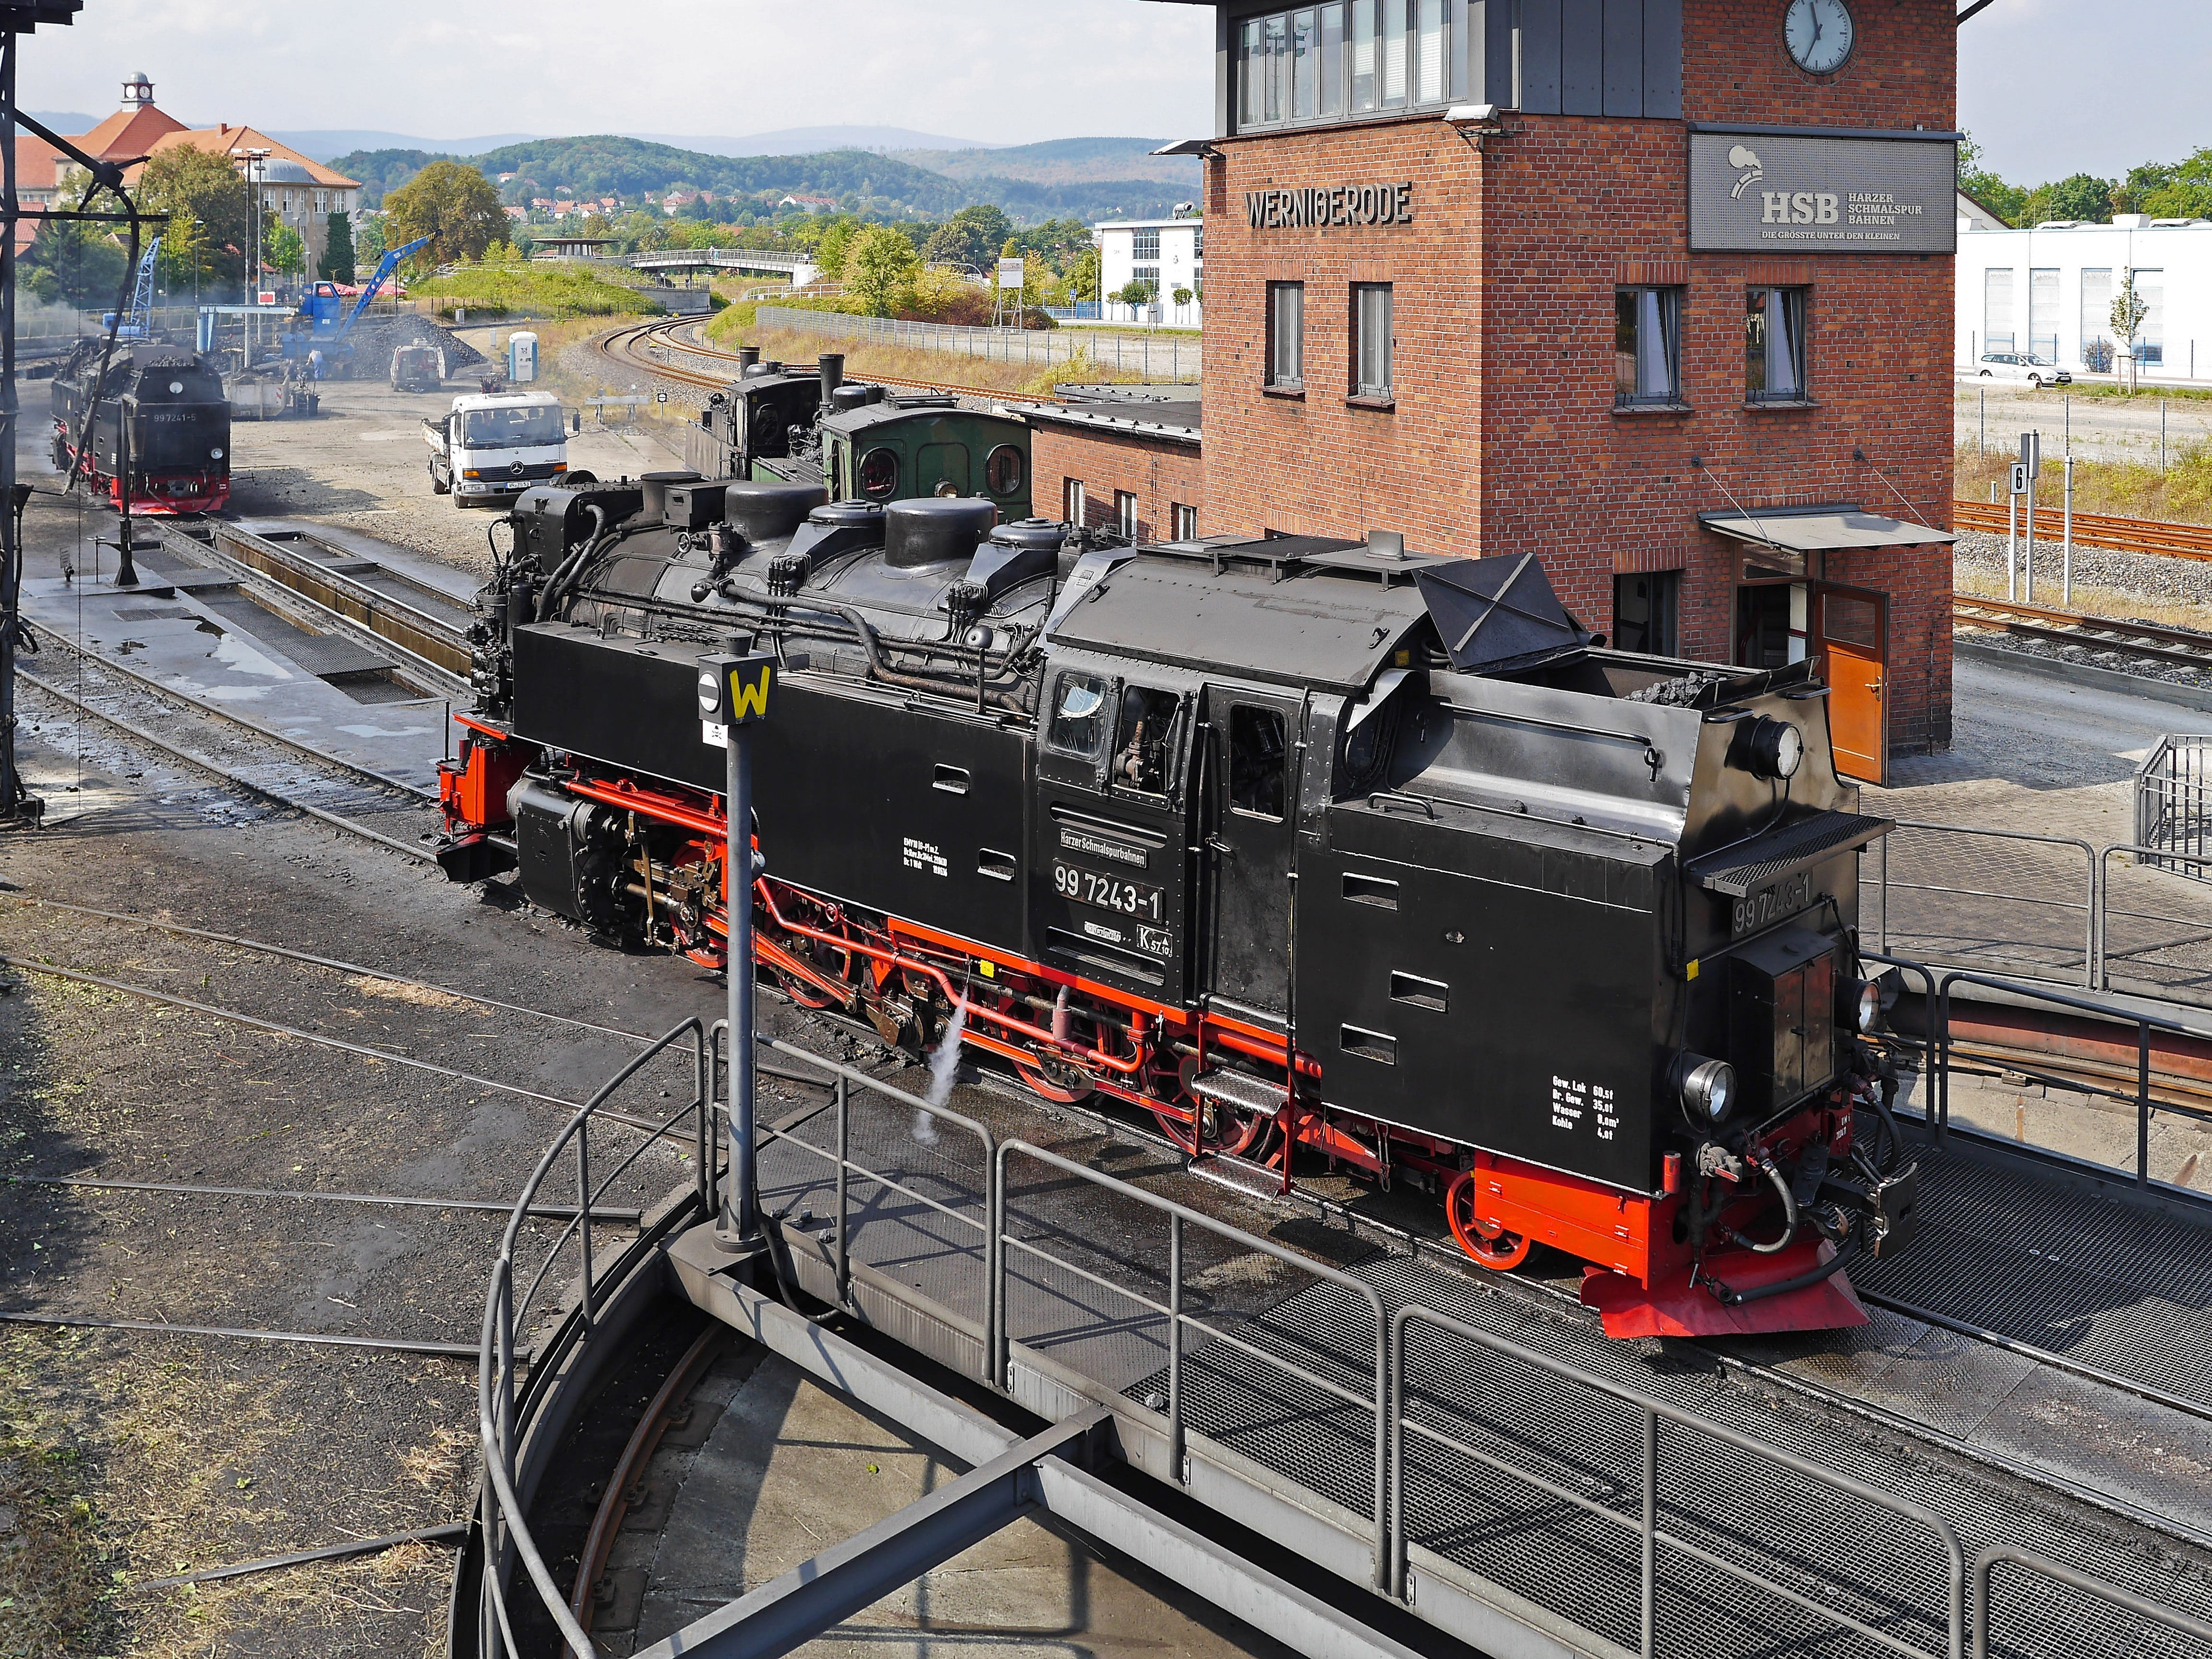 Steam Locomotive, Narrow Gauge Railway, hub, tank locomotive